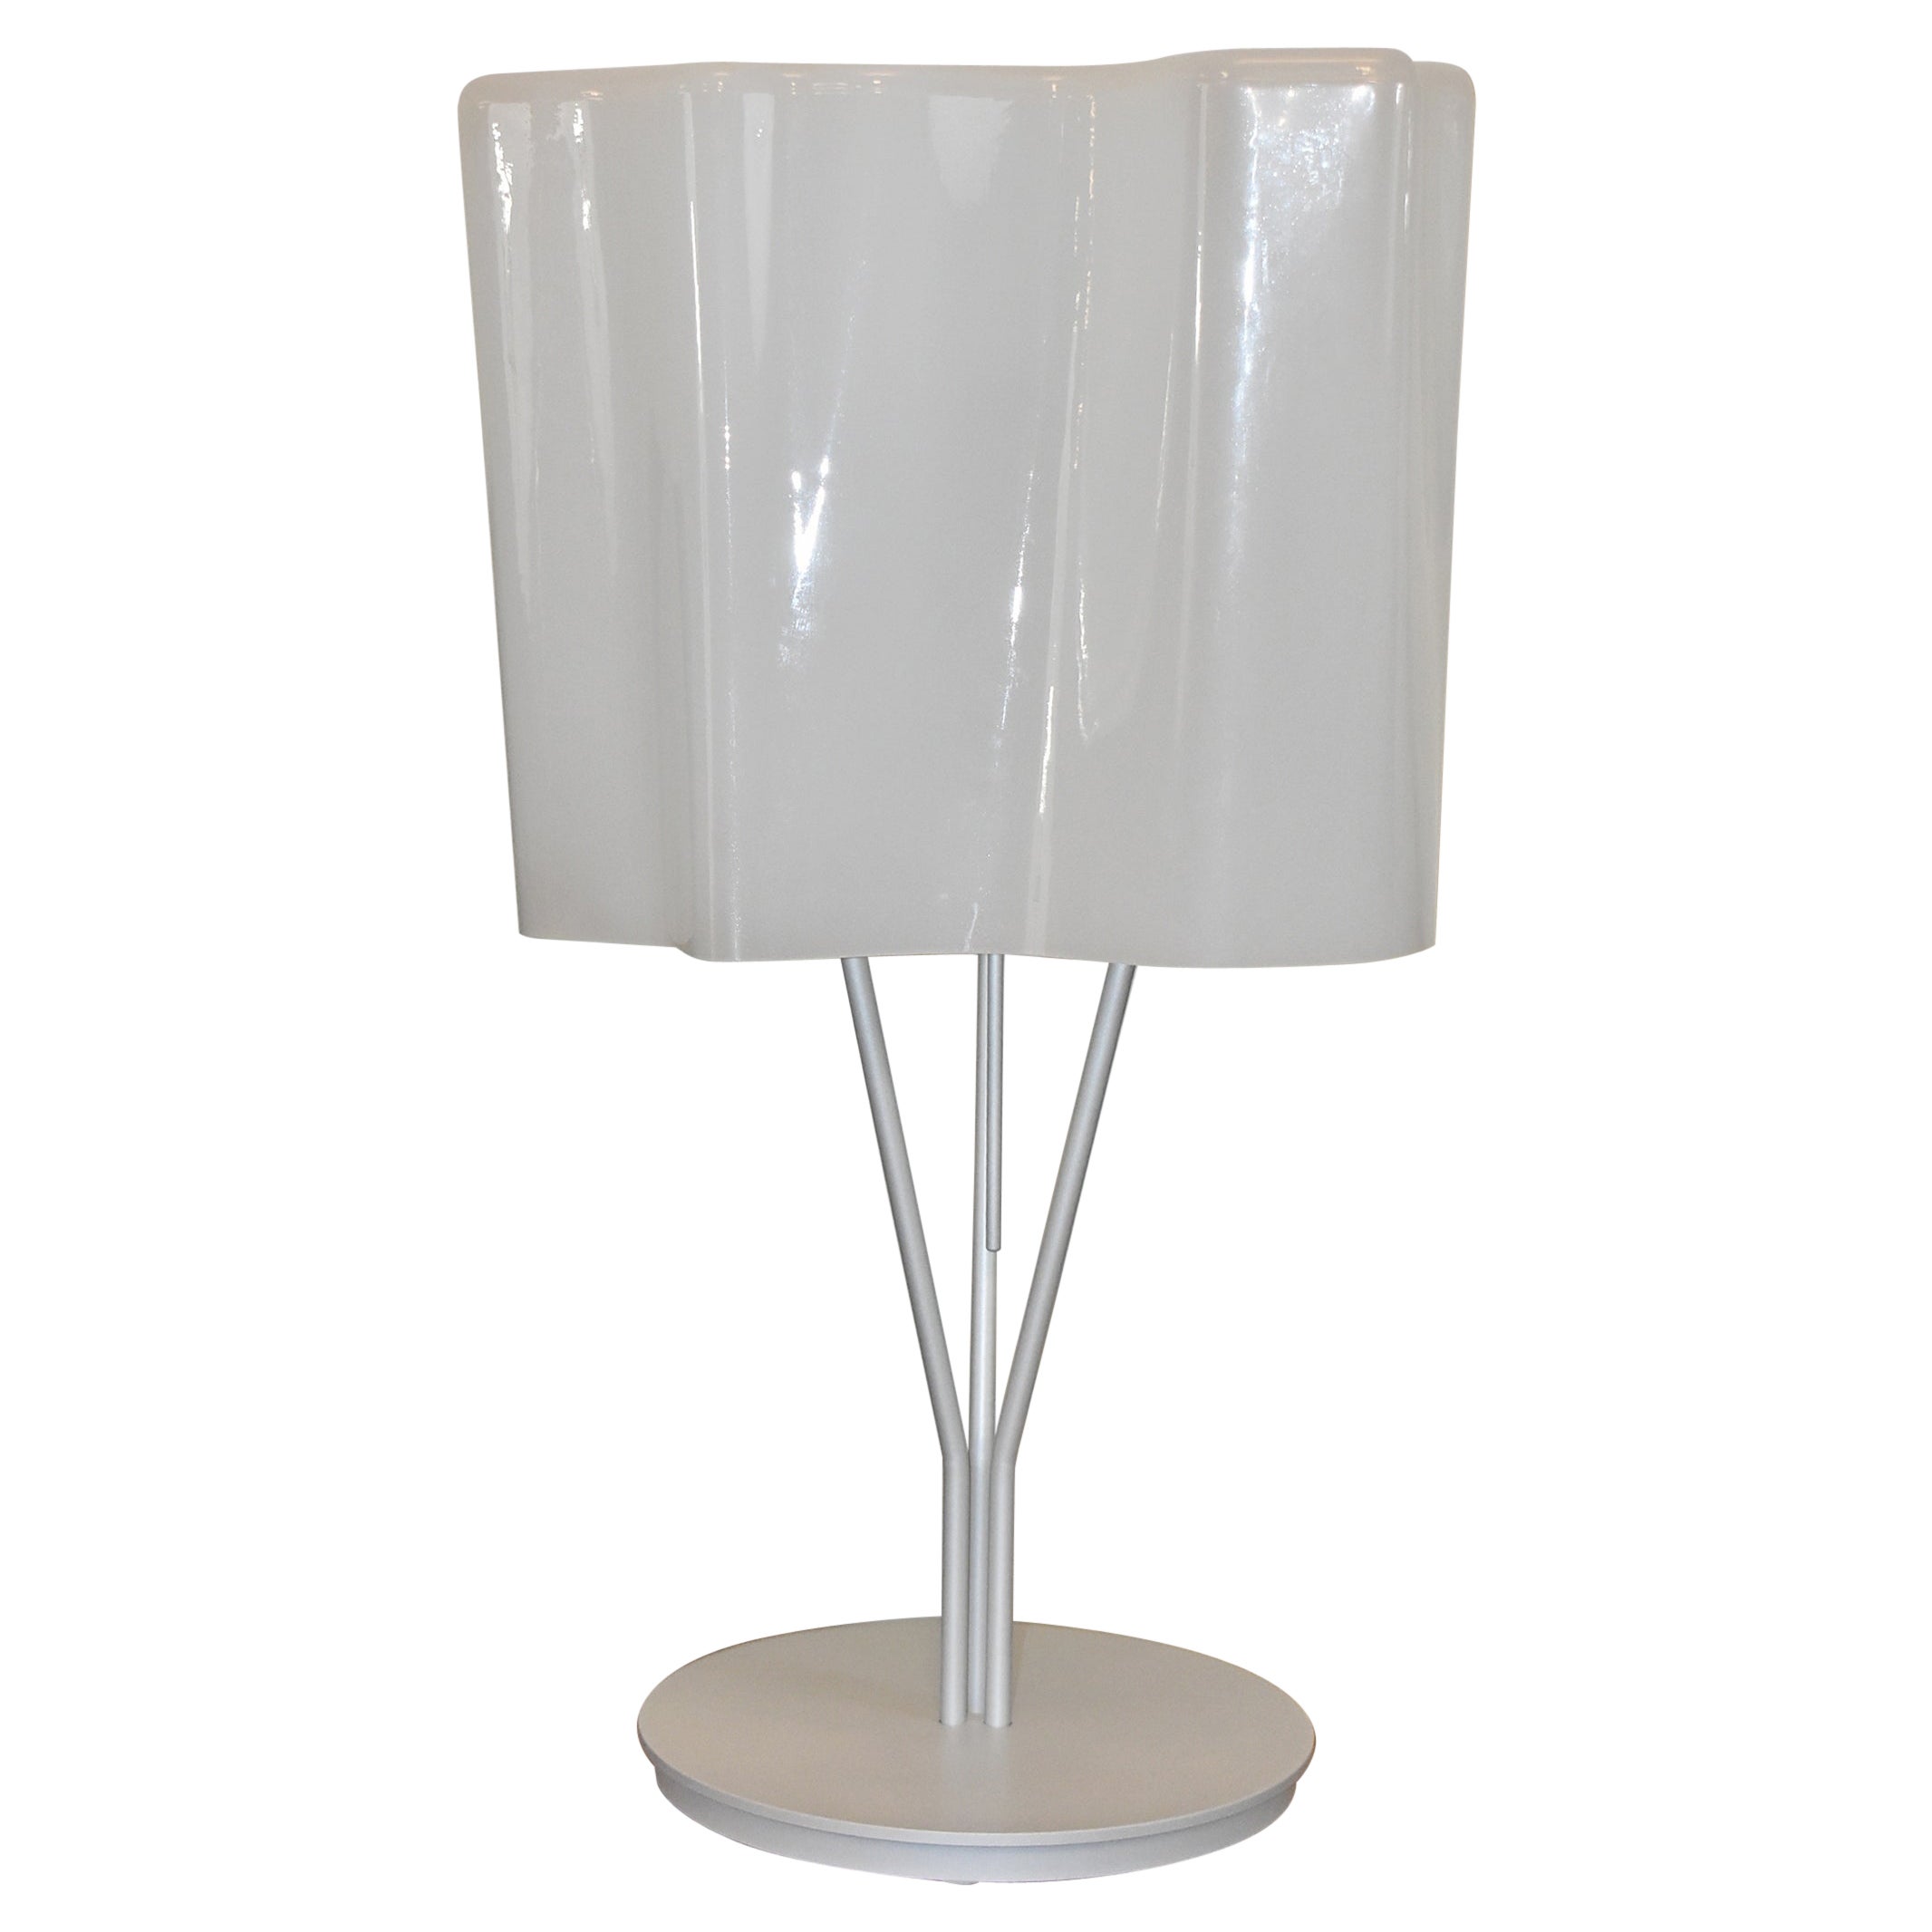 Artemide Italian "Logico" Table Lamp